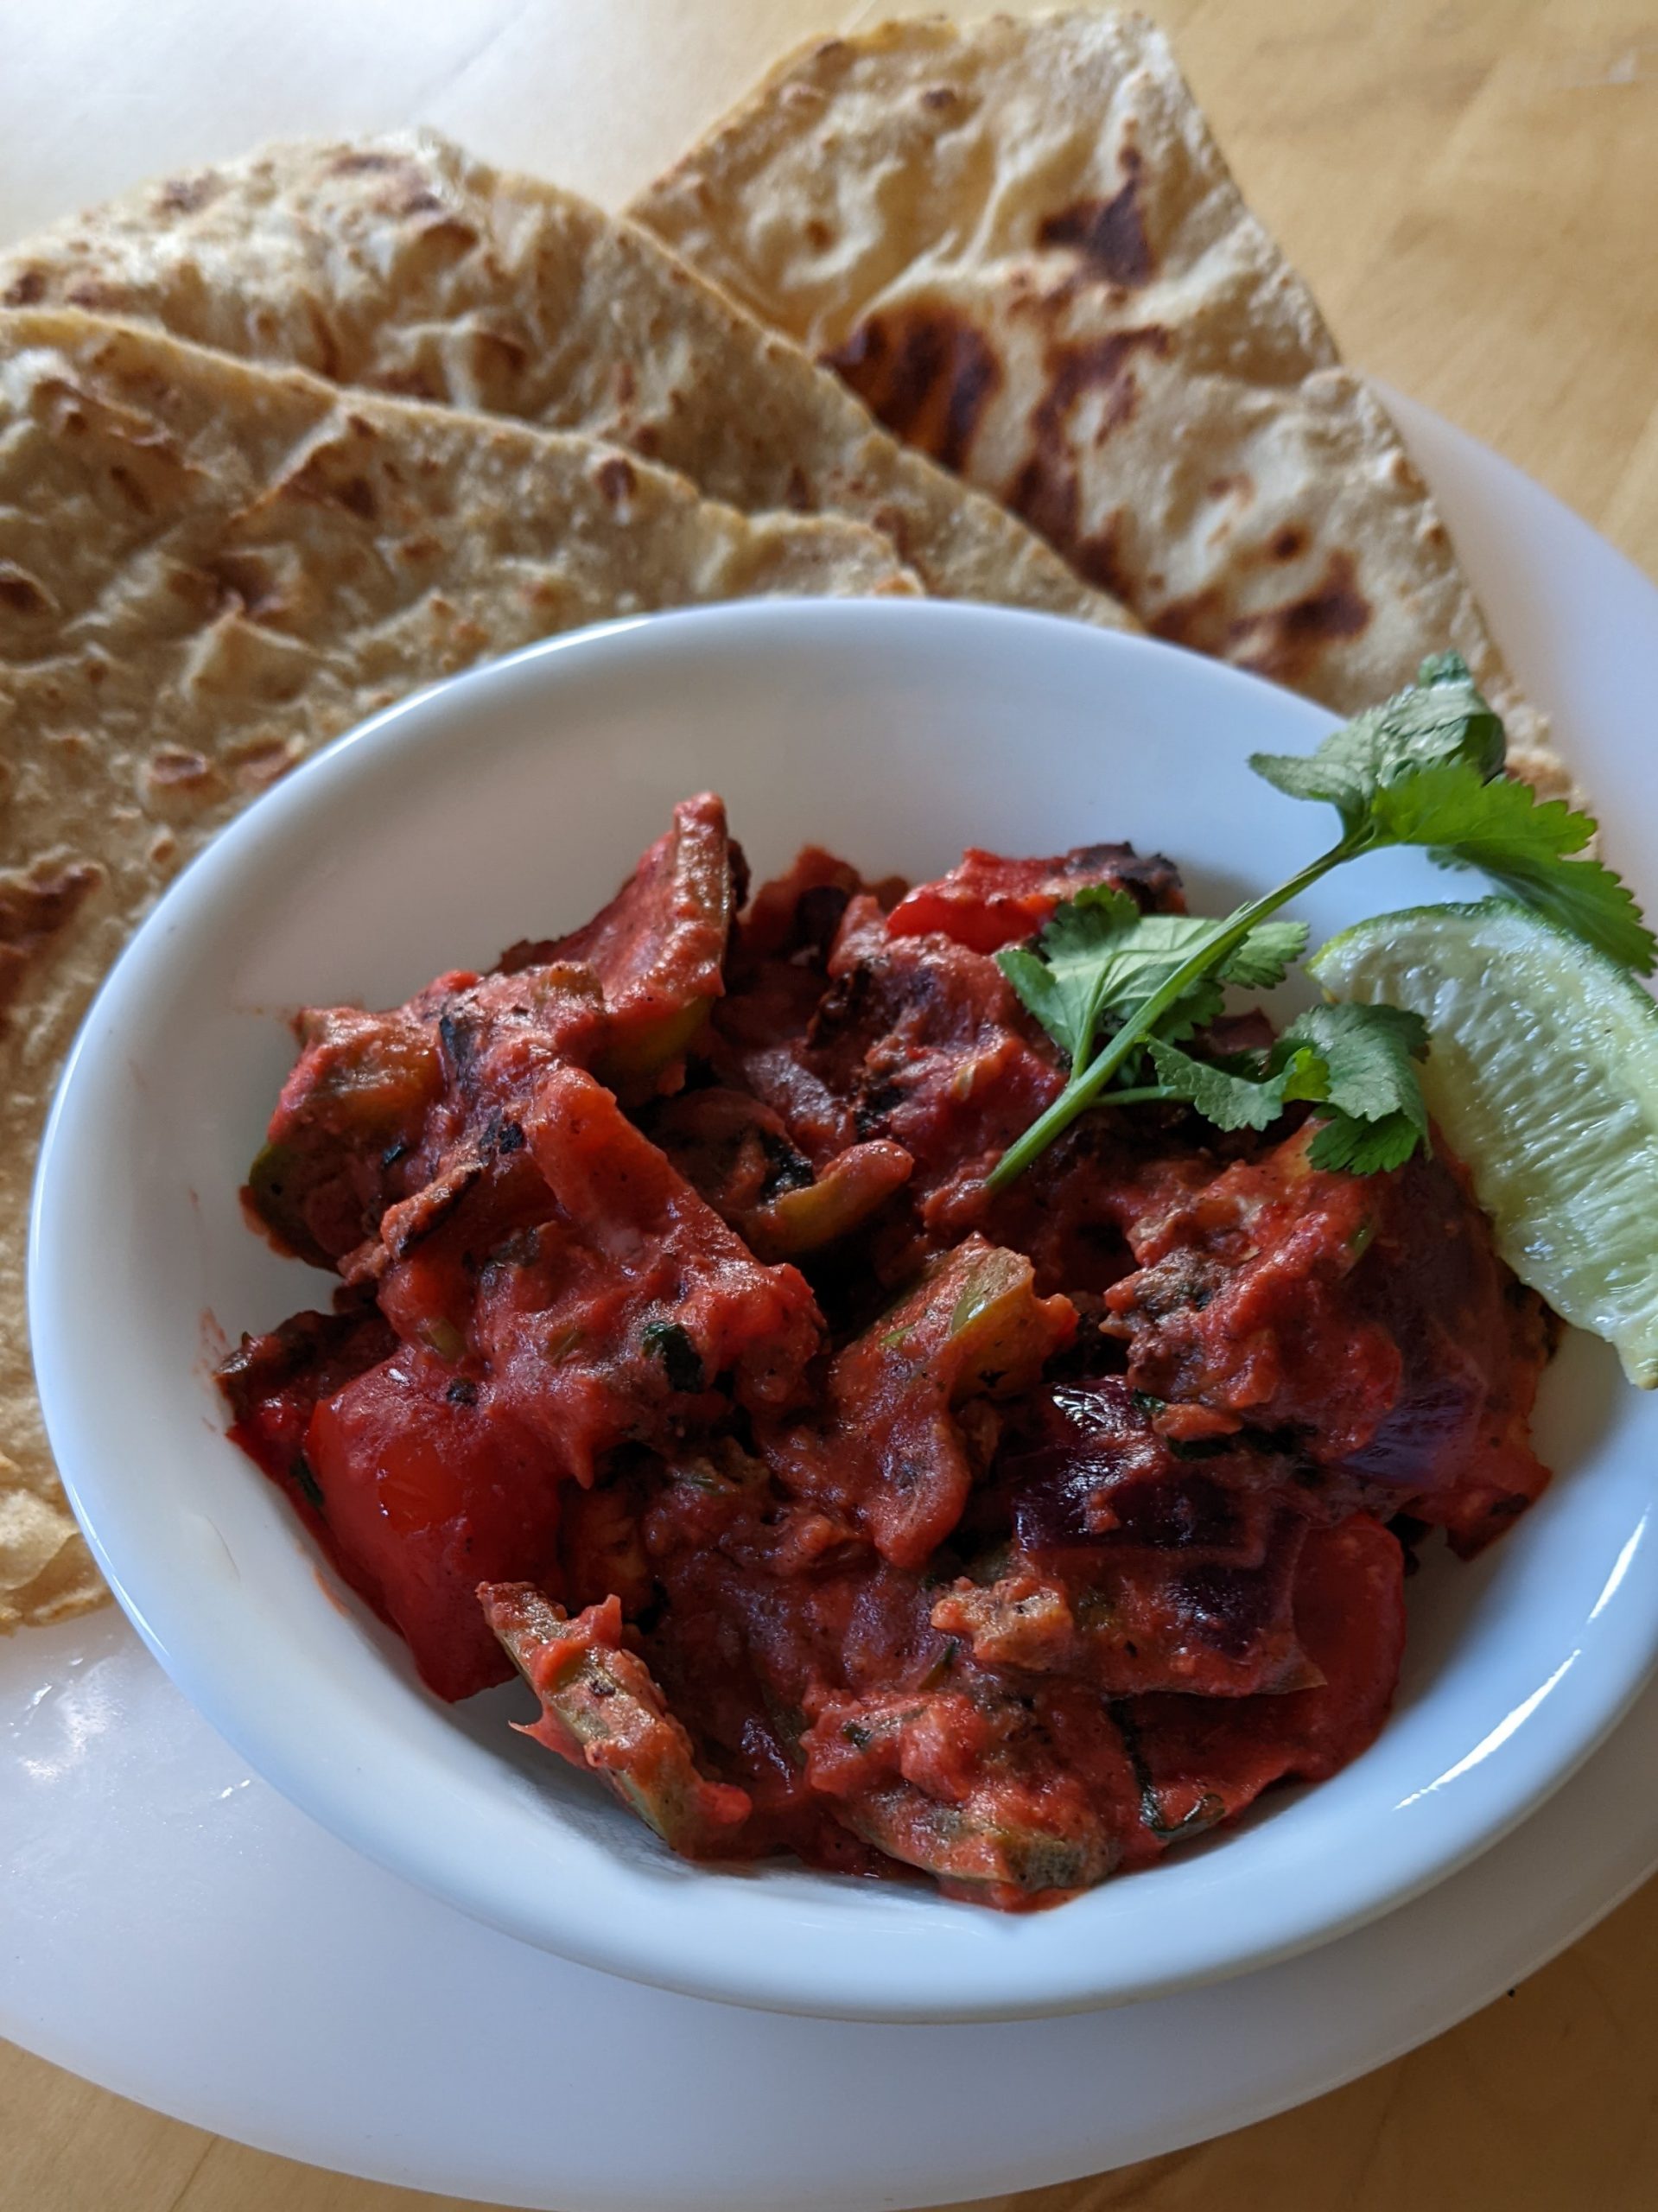 paneer-tikka-masala-indian-curries-vegetarian-recipes-uk-with-turmeric-powder